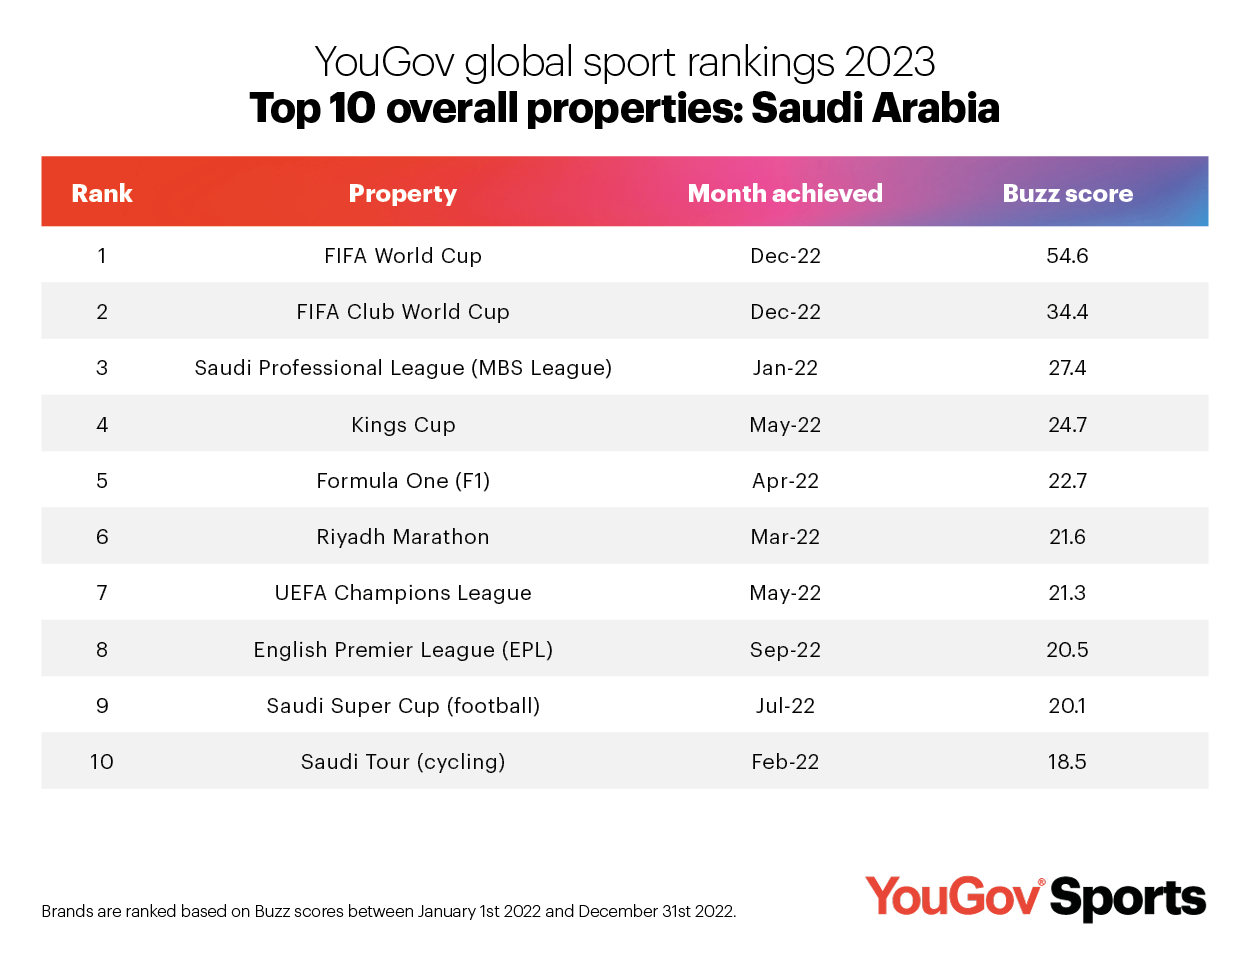 FIFA World Cup tops YouGovs Global Sport Rankings 2023 in Saudi Arabia